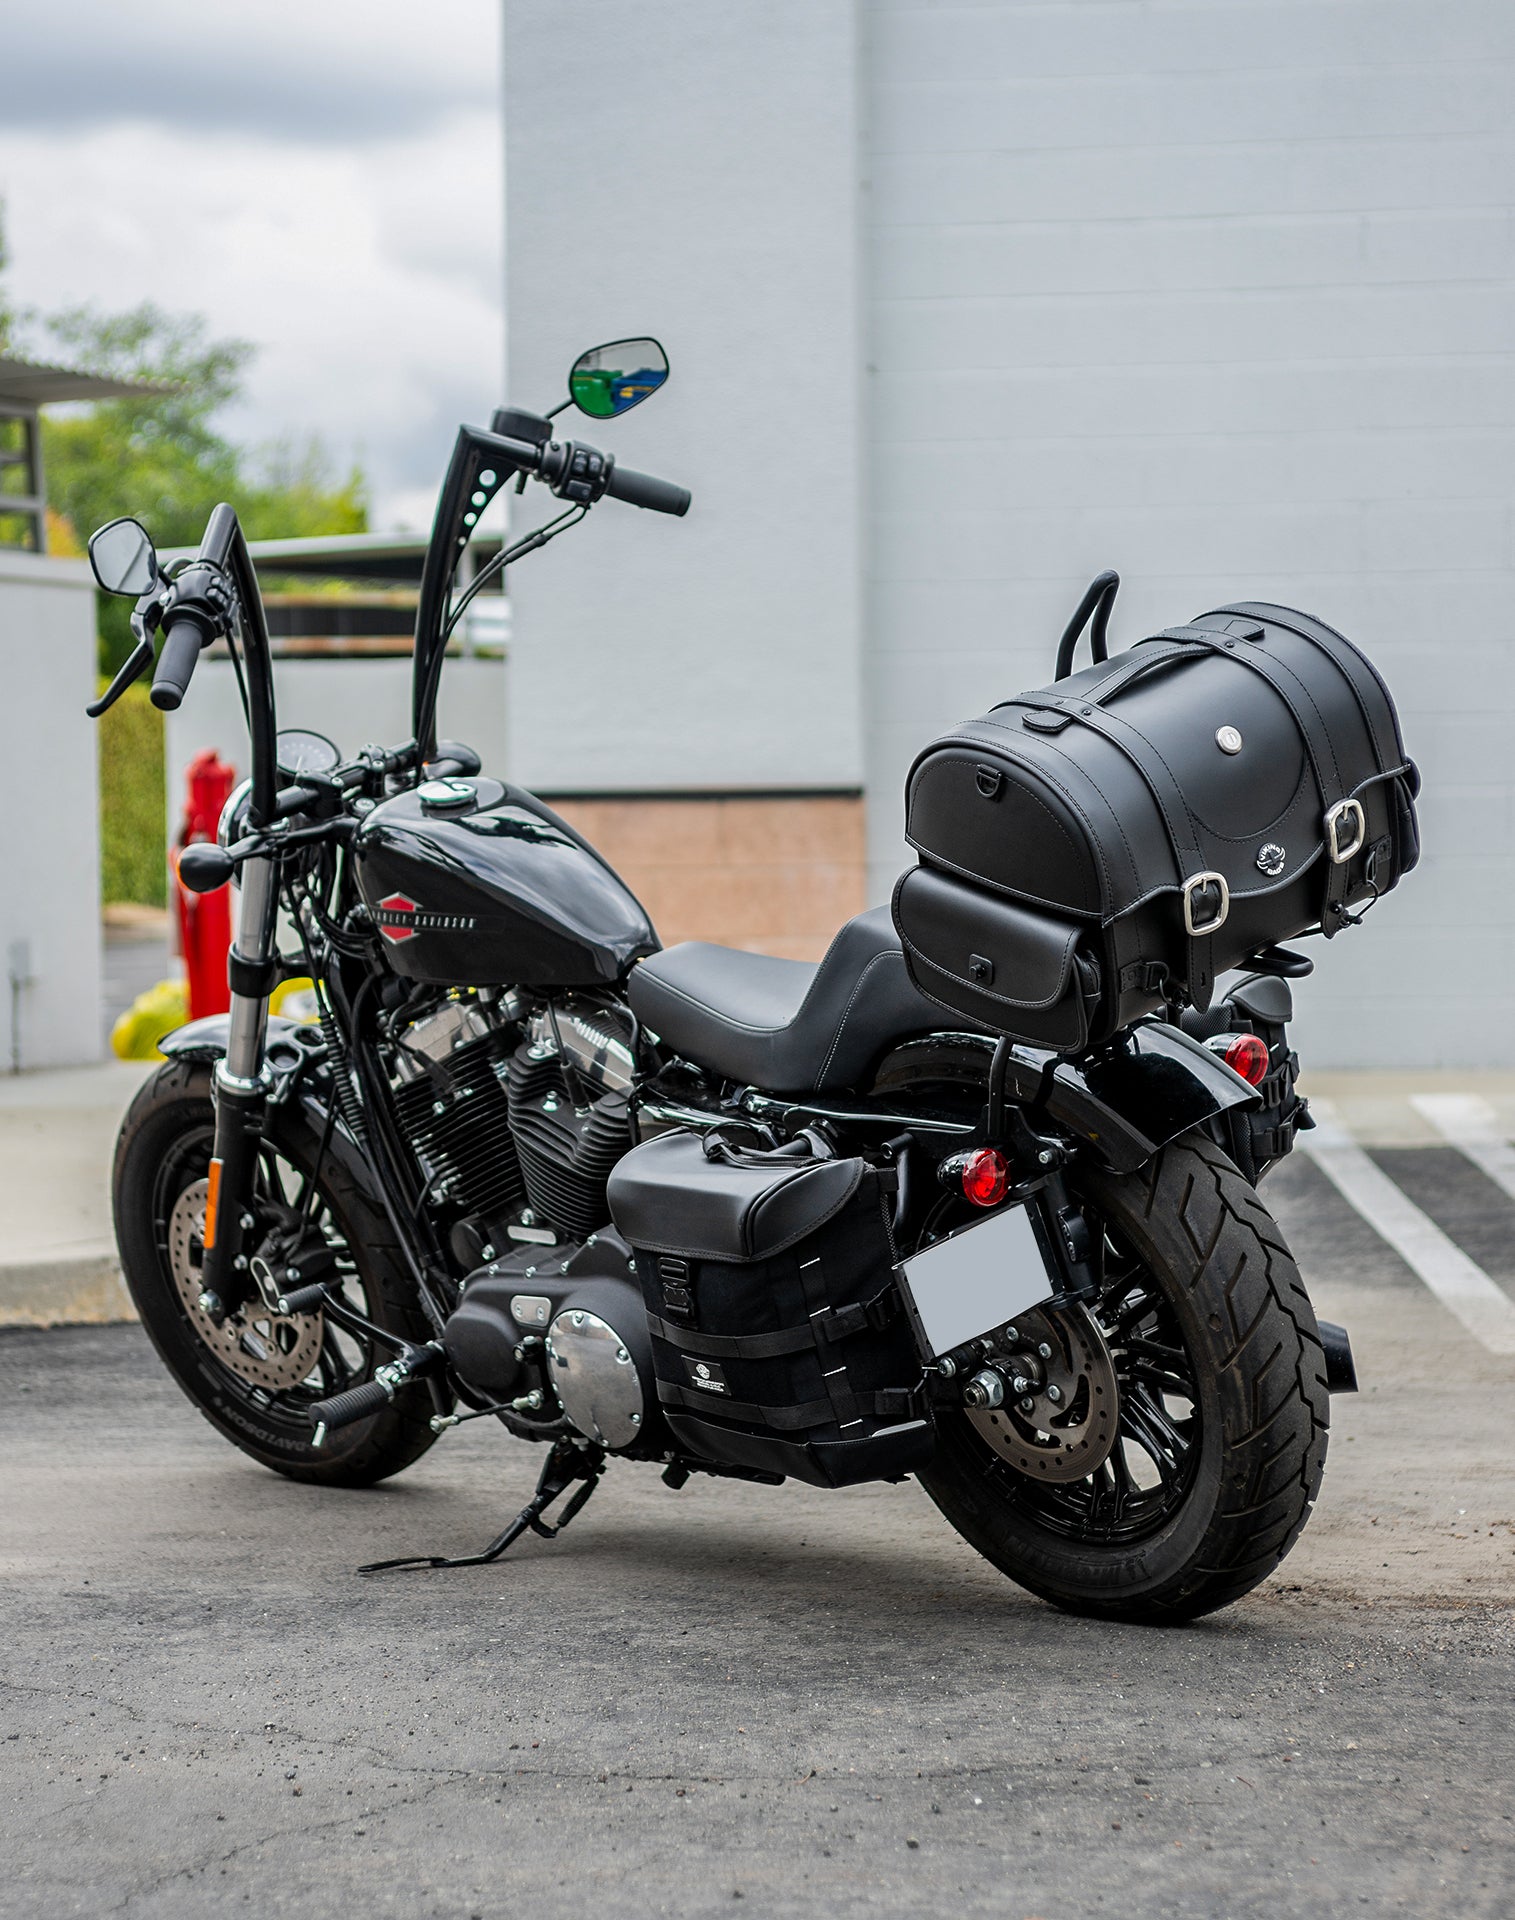 18L - Century Medium Leather Motorcycle Sissy Bar Bag for Harley Davidson